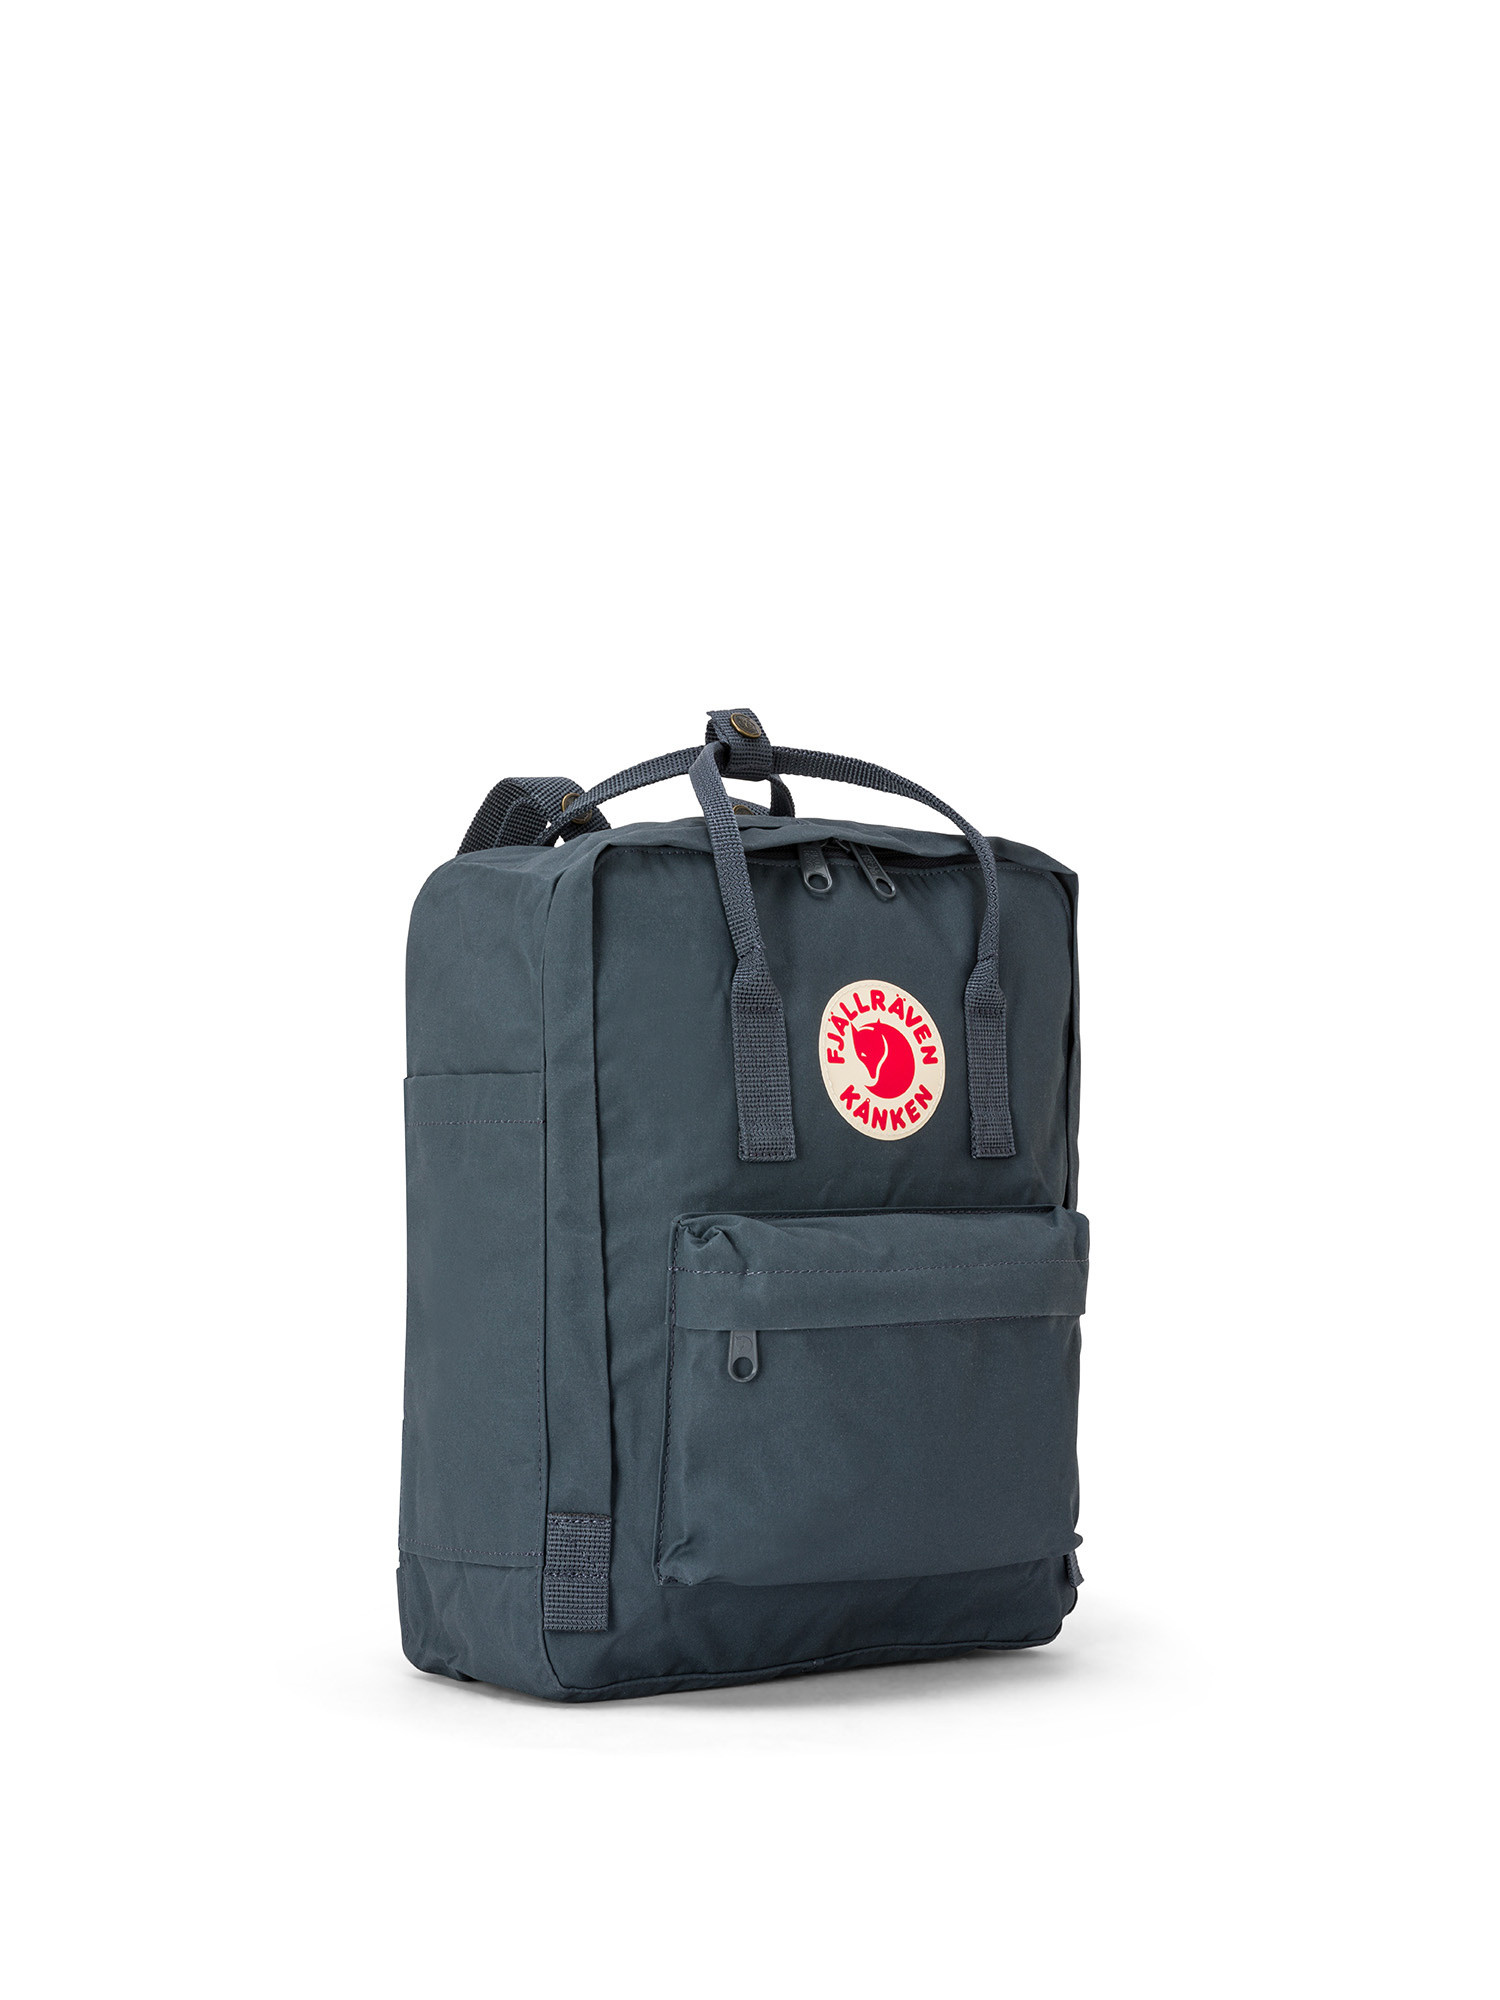 Fjallraven - Classic Kånken backpack in durable Vinylon fabric, Dark Grey, large image number 1